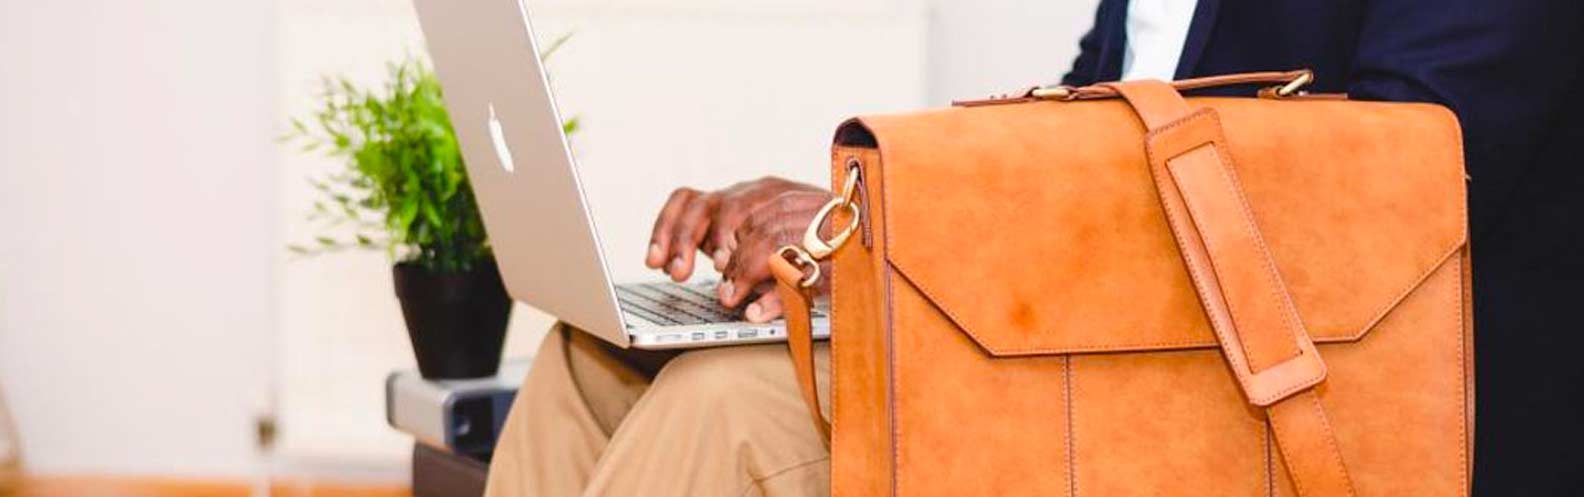 Man types on laptop while traveling.